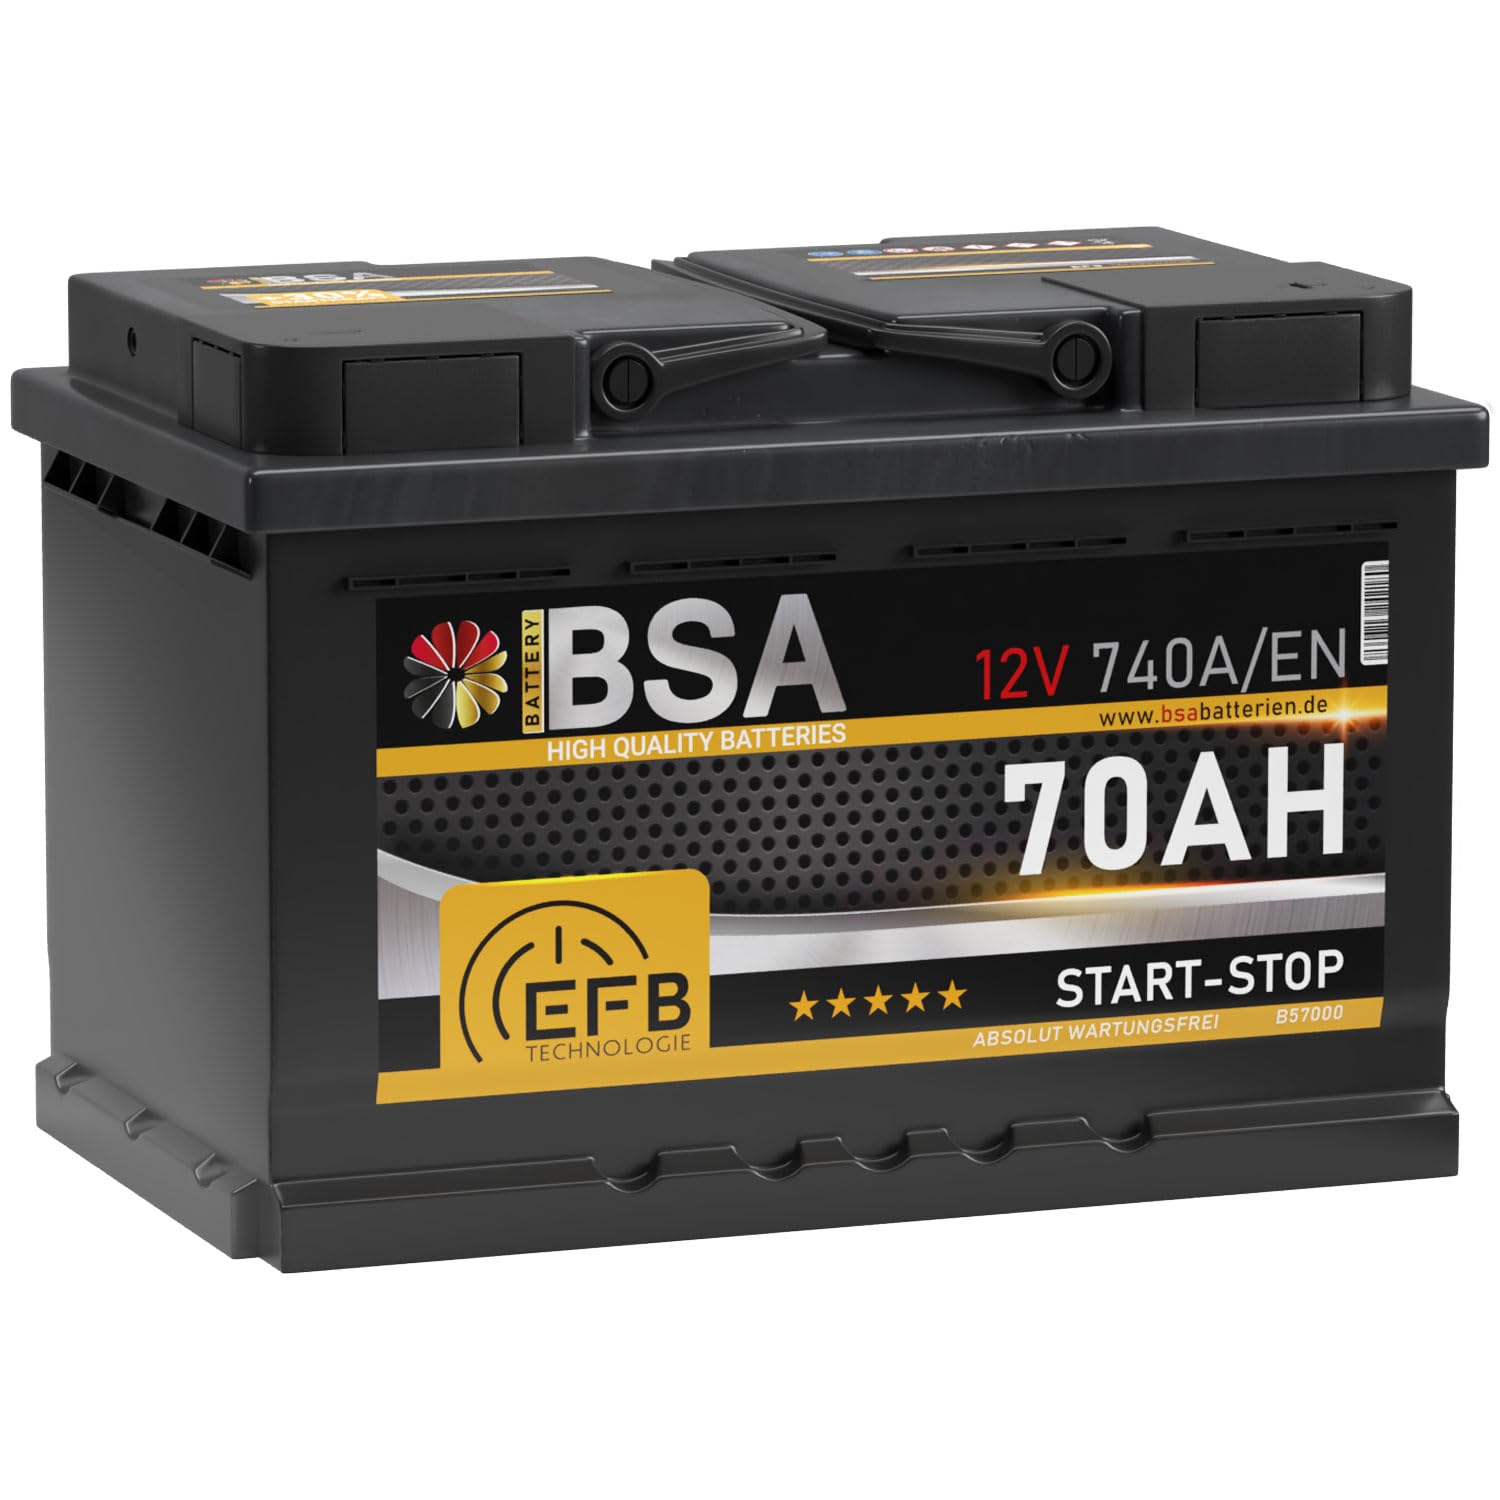 BSA EFB Batterie 70Ah 12V Start Stop Batterie Autobatterie Starterbatterie von BSA BATTERY HIGH QUALITY BATTERIES